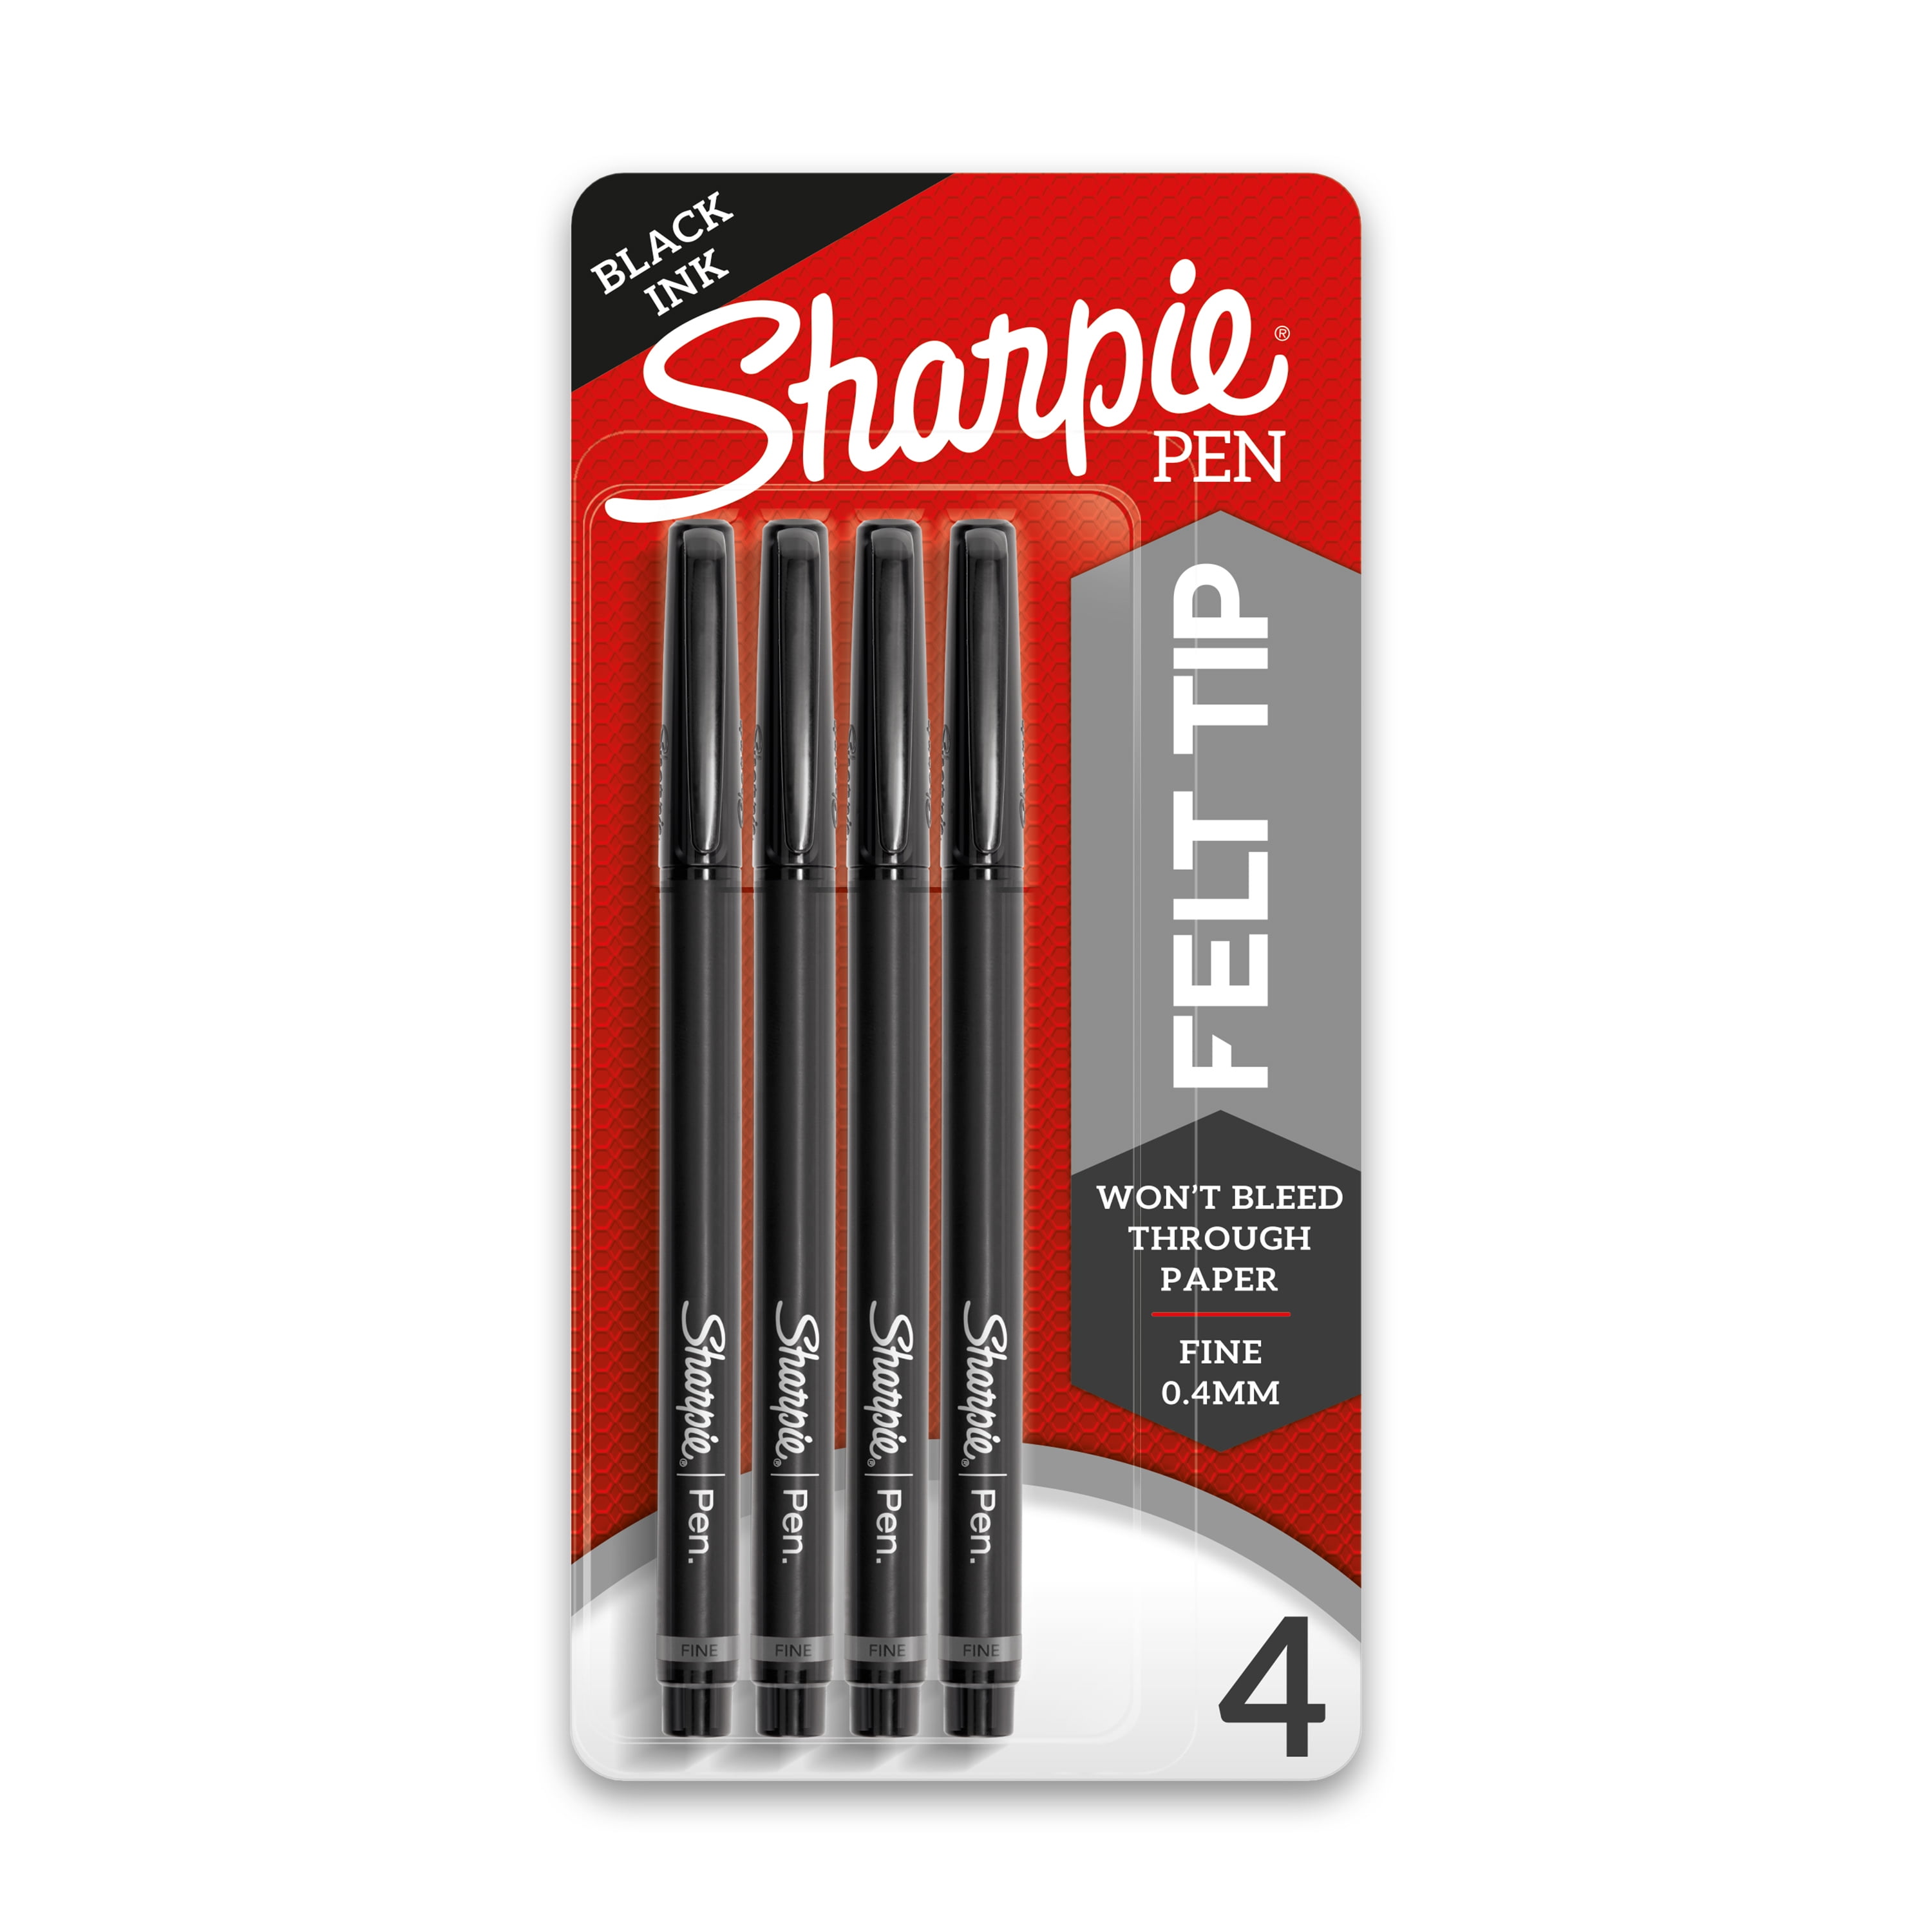 Sharpie Felt Tip Pens, Fine Point (0.4mm), Black, 4 Count